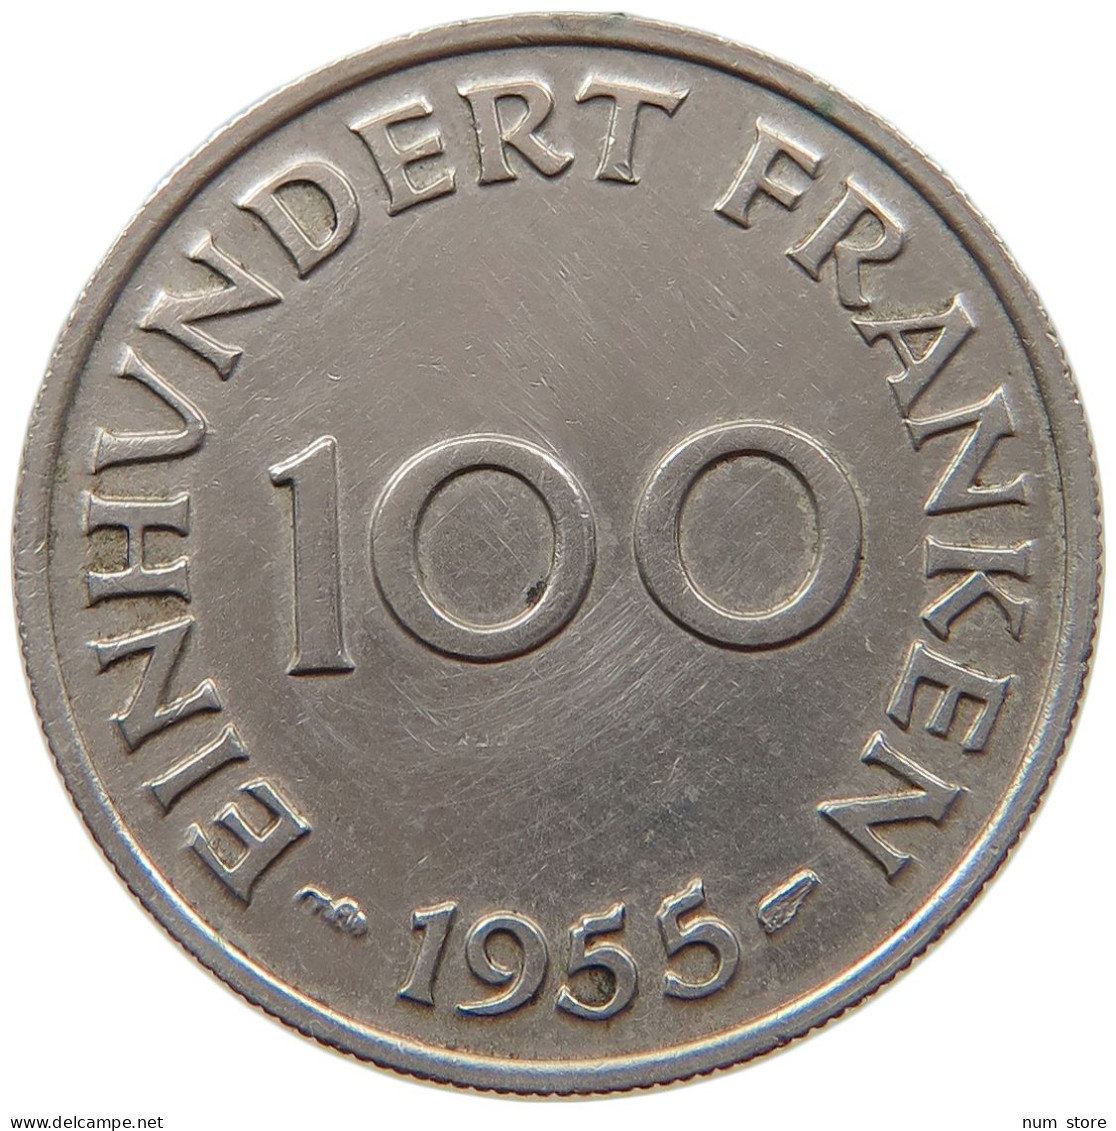 SAARLAND 100 FRANKEN 1955  #c063 0399 - 100 Francos